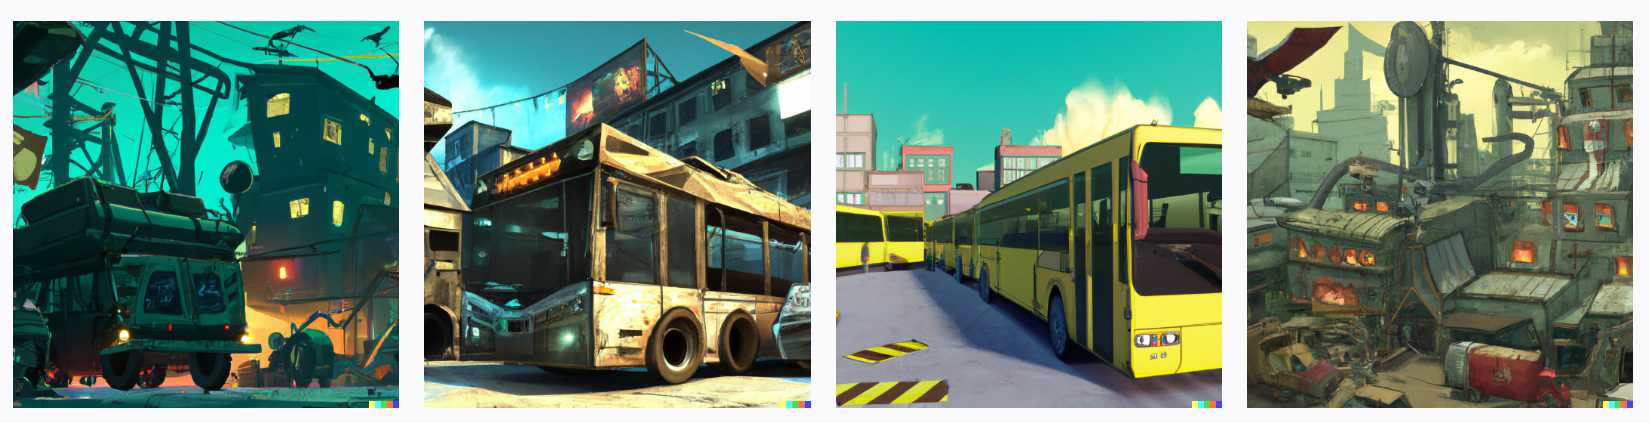 bus town chimera, digital art